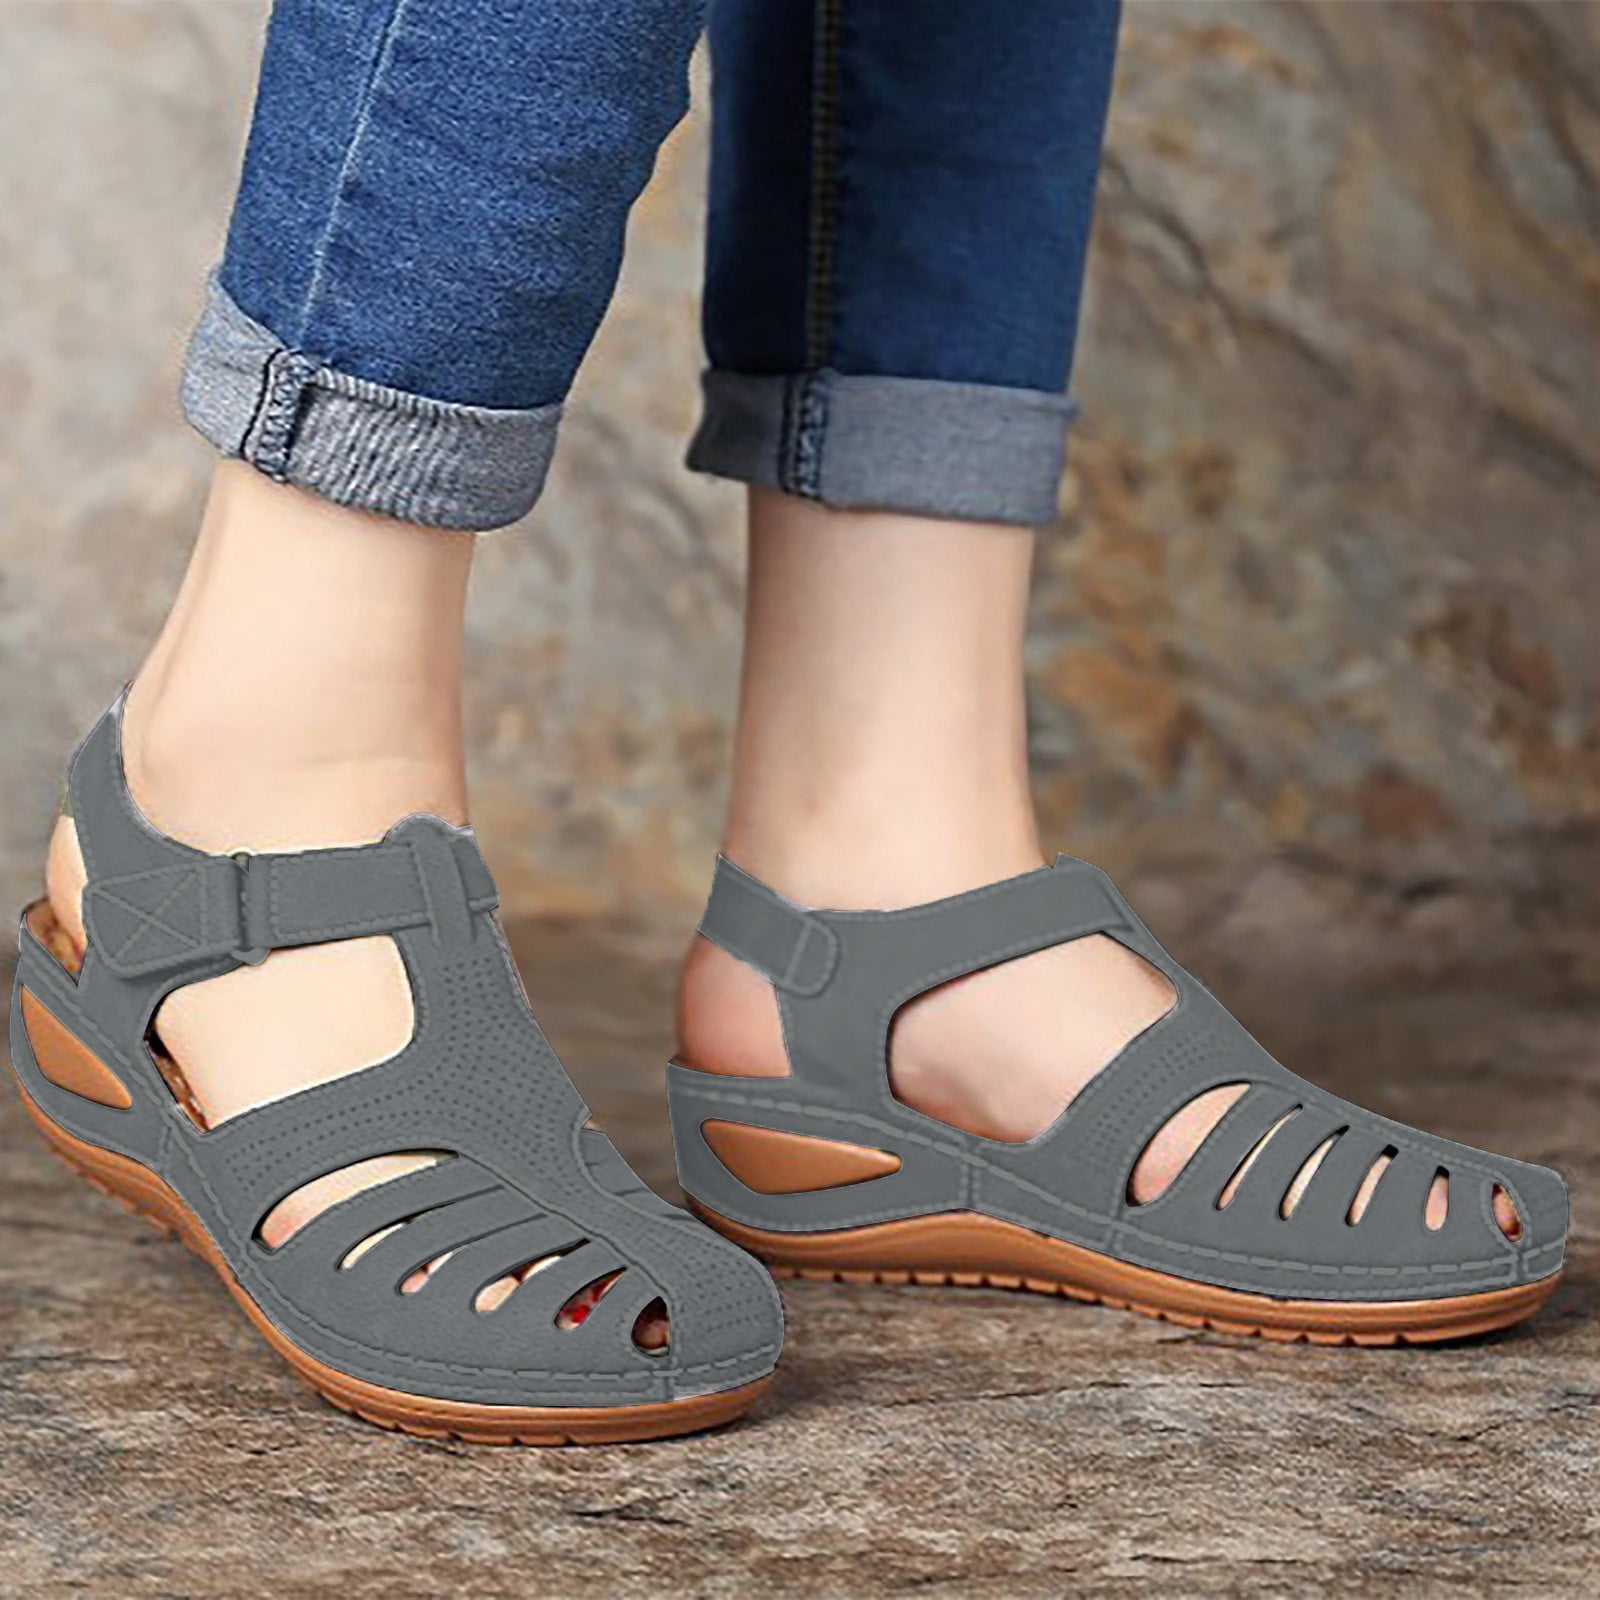 Aboser Sandals for Women Wedges Platform Gladiator Sandals Bohemia ...